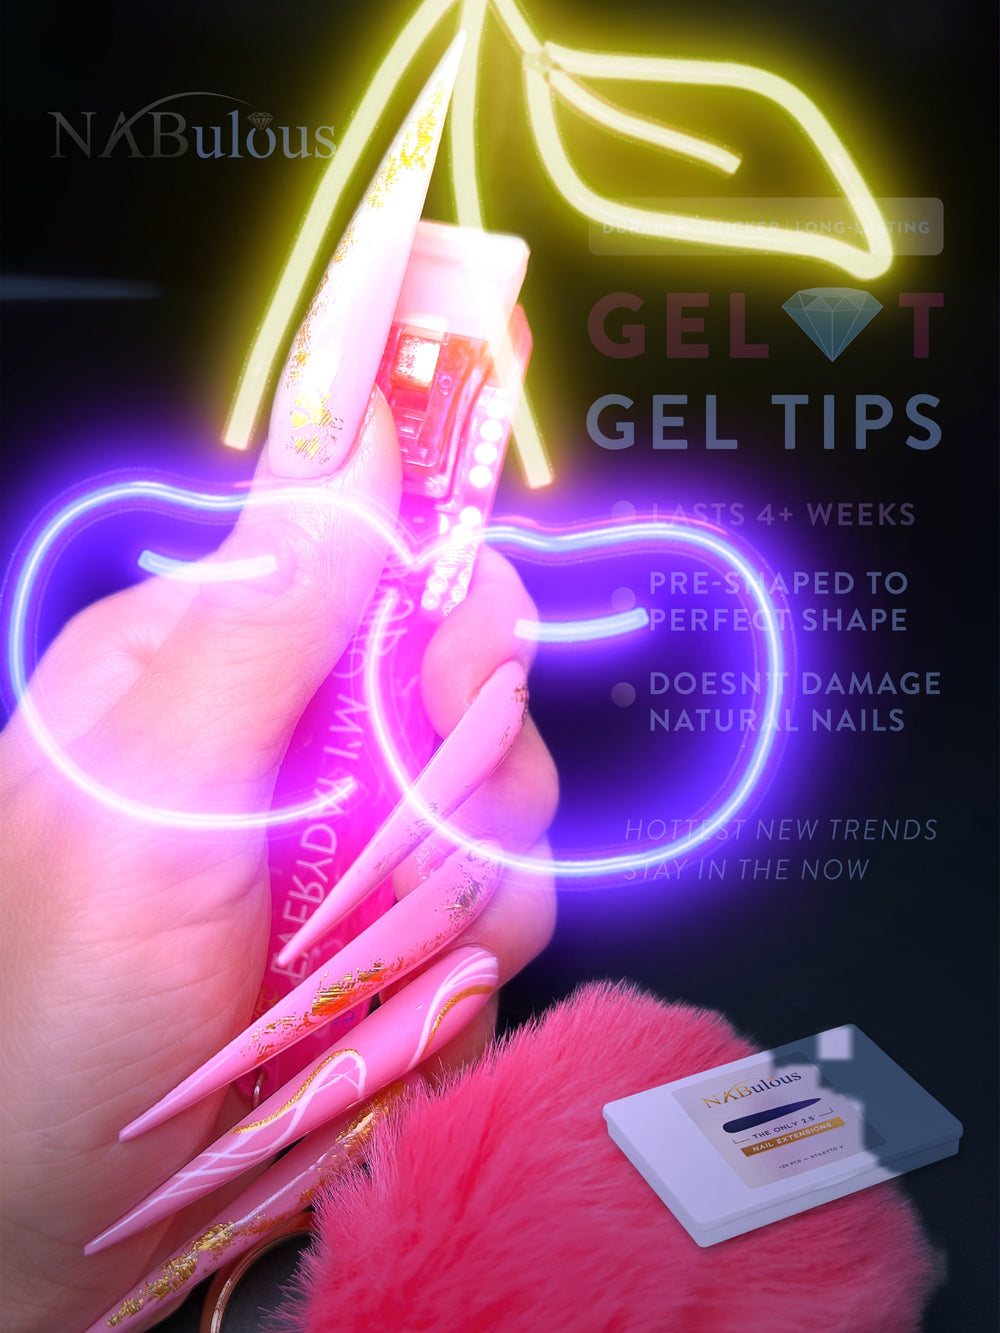 PangiFen 4pcs Card Grabber for Long Nails Keychain ATM Card Clip for Long  Nails Credit Card Puller for Women